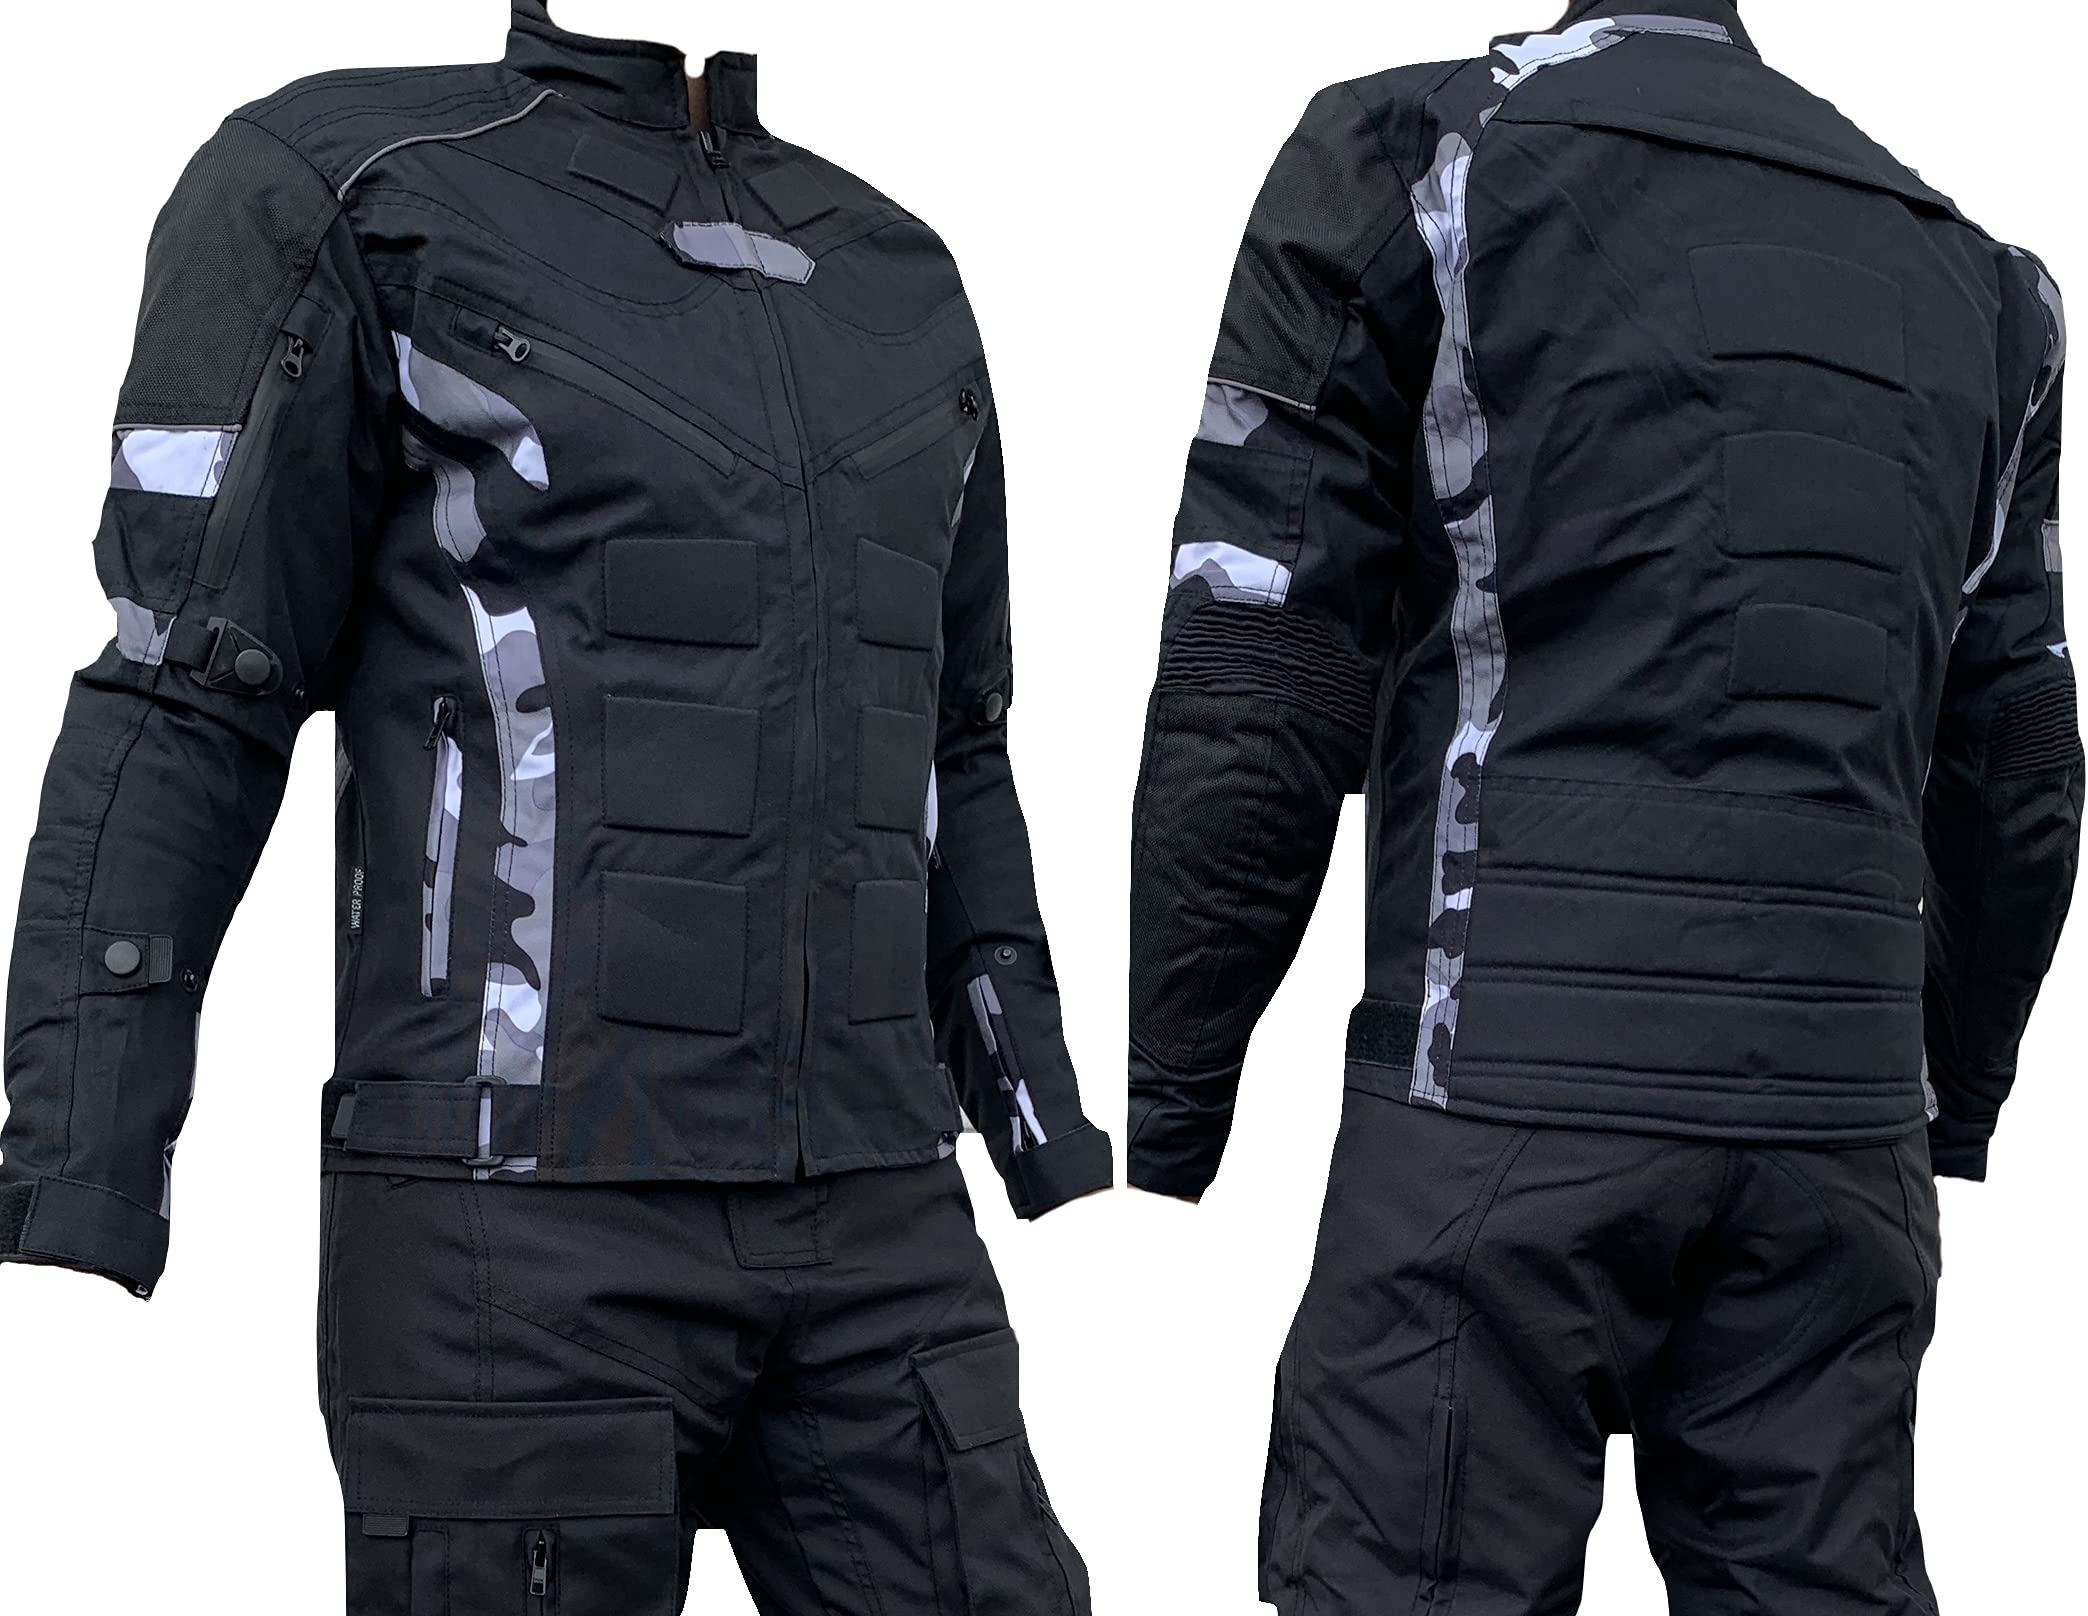 L&J Motorradjacke - Jacke mit herausnehmbaren Protektoren - Textil Motorrad Jacke Biker (s)